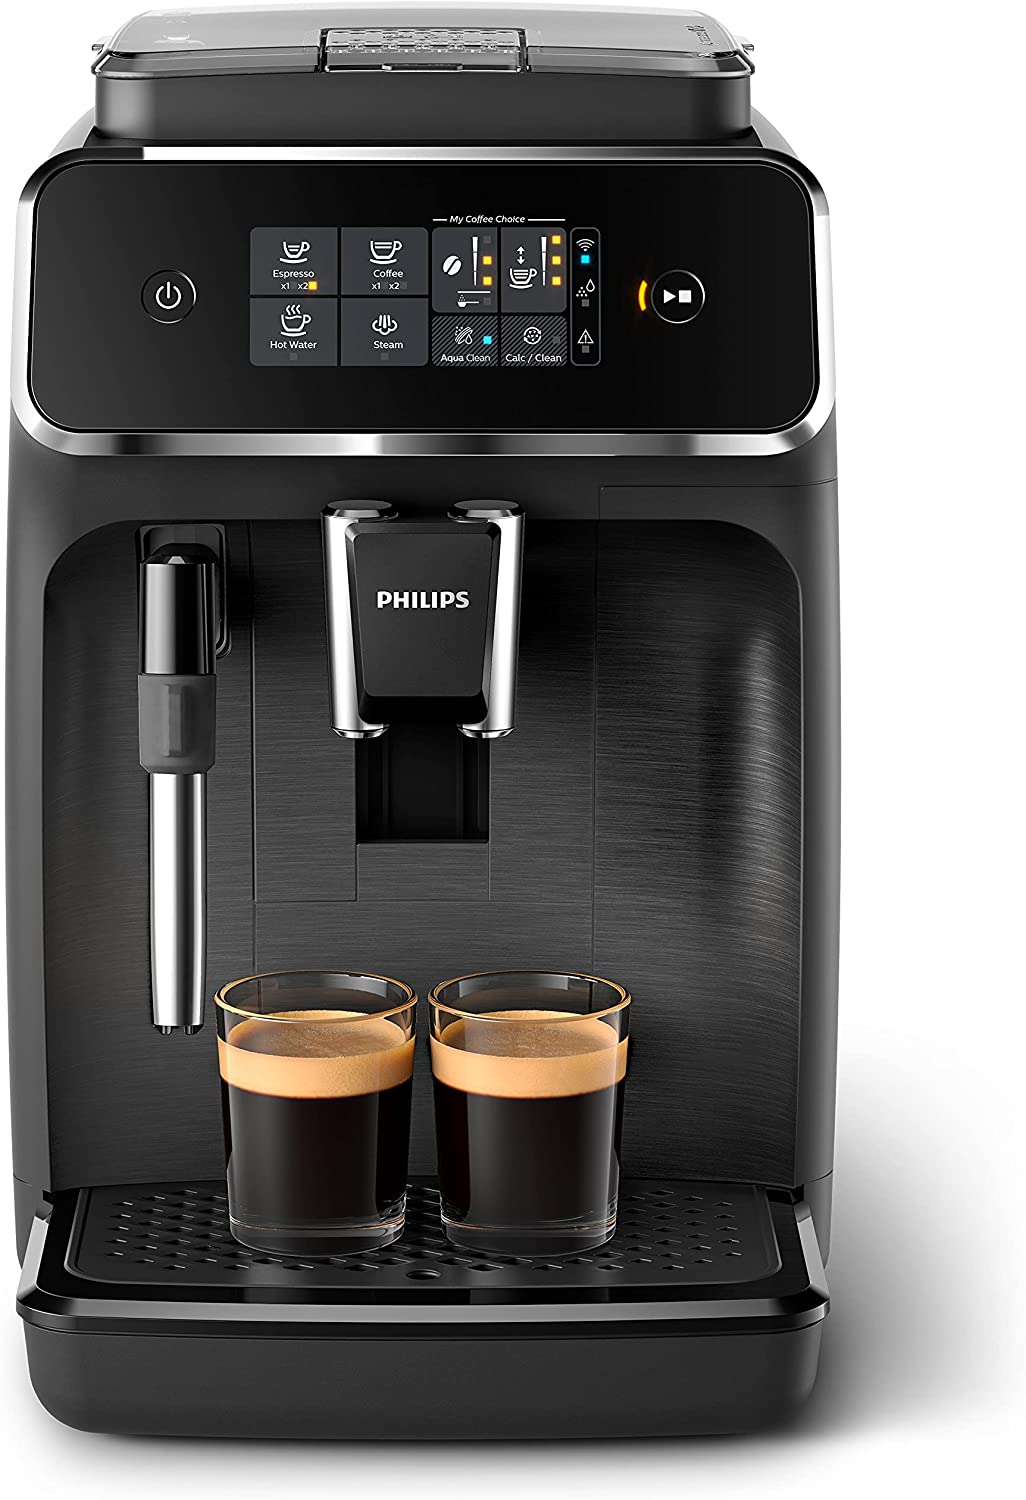 Philips Domestic Appliances Philips 2200 Series EP2520/10 Volomatic Espresso Machine with WiFi Connecti